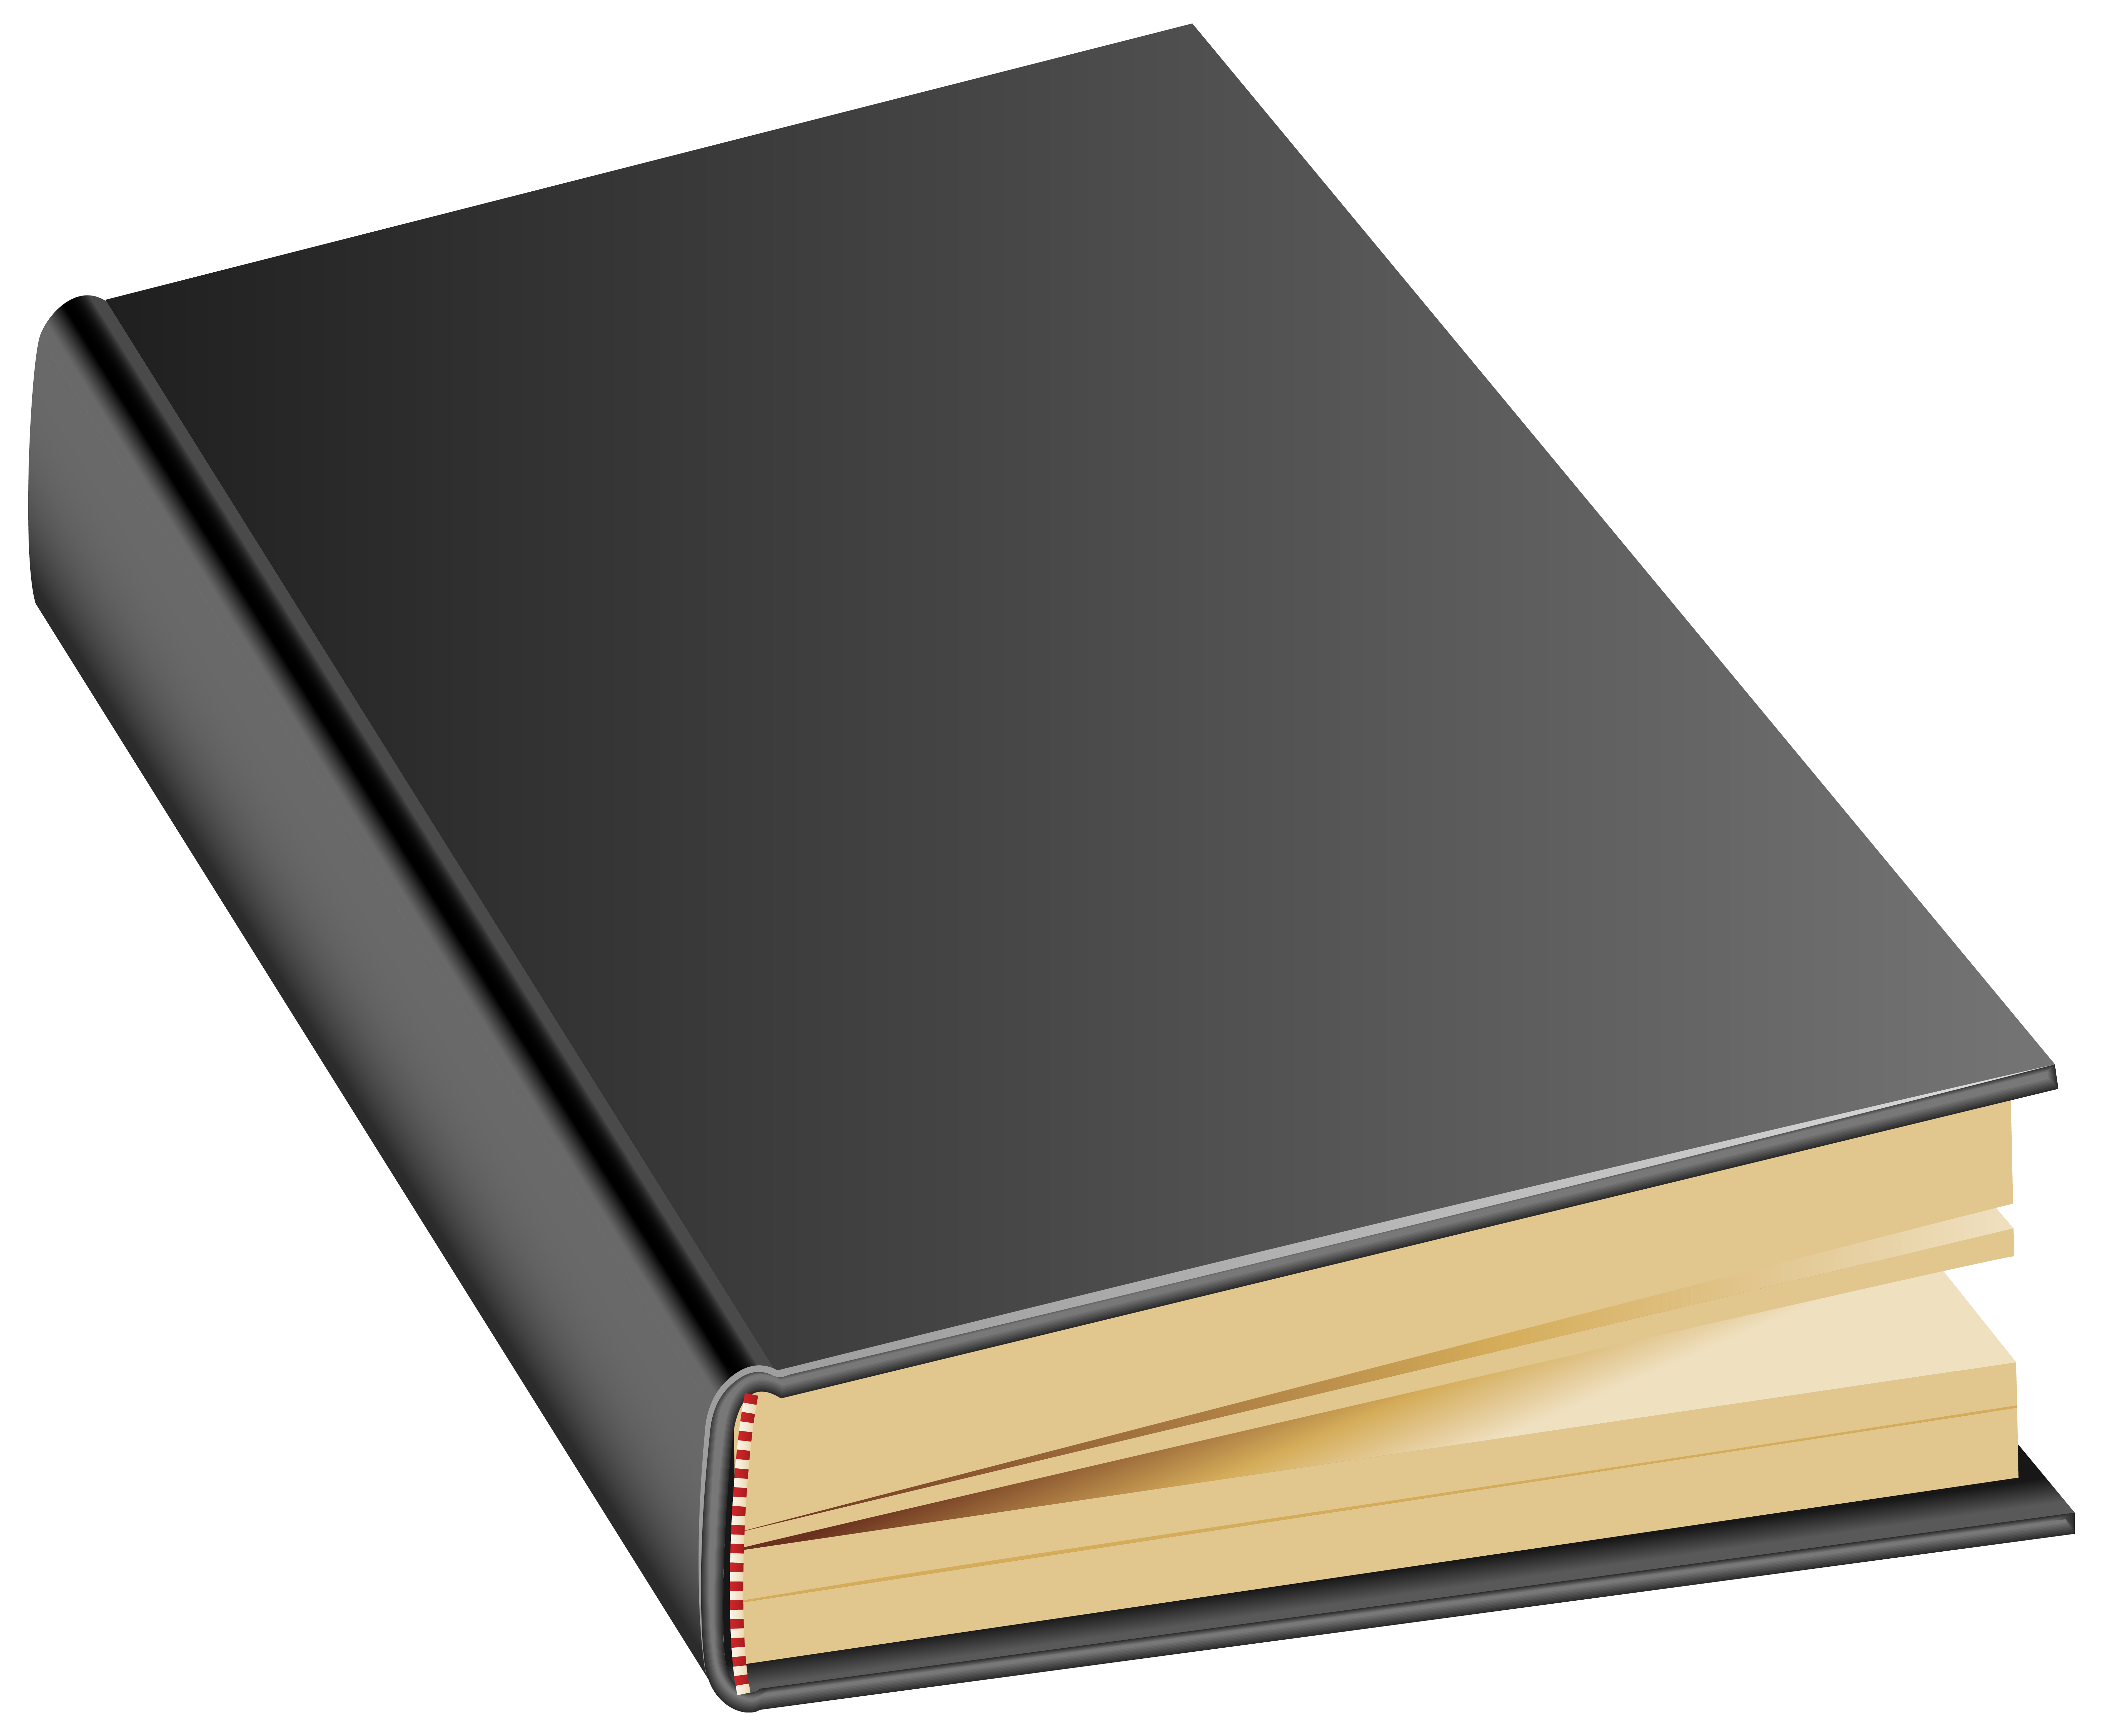 Black book png best. Clipart books rectangular